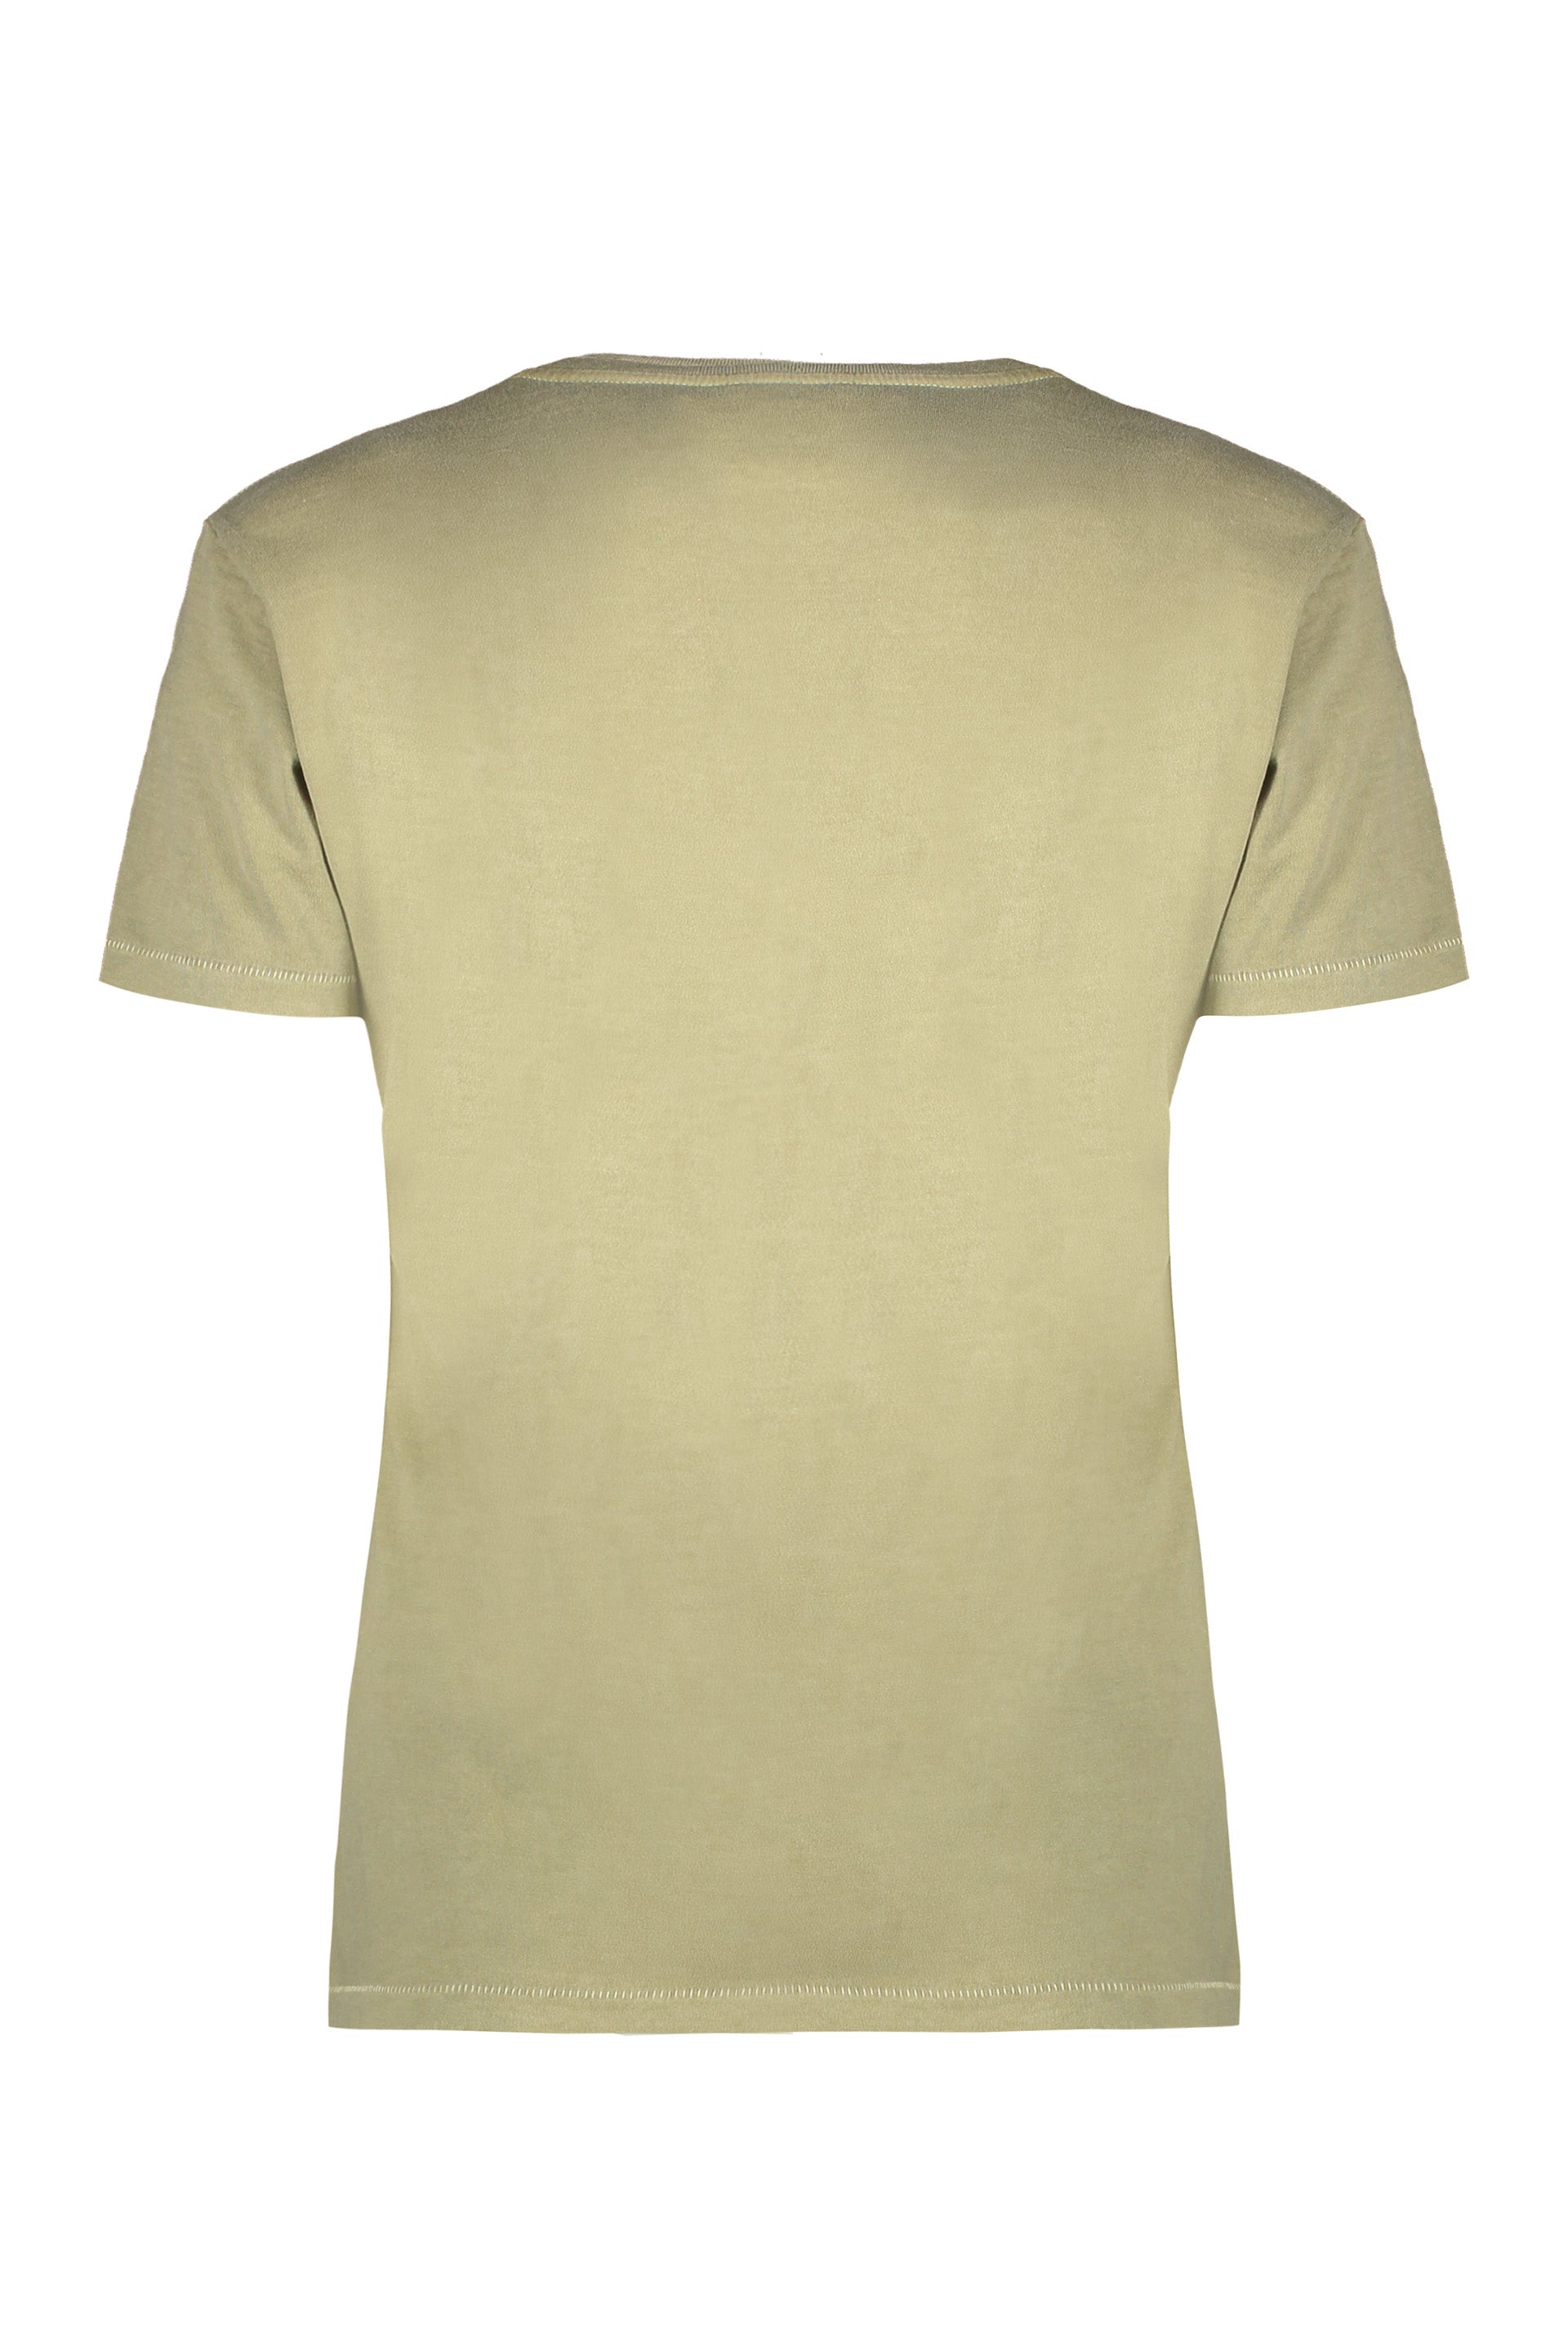 Parajumpers-OUTLET-SALE-Cotton-T-shirt-Shirts-ARCHIVE-COLLECTION-2_86a4ee80-547f-4238-902e-87e20ec59723.jpg